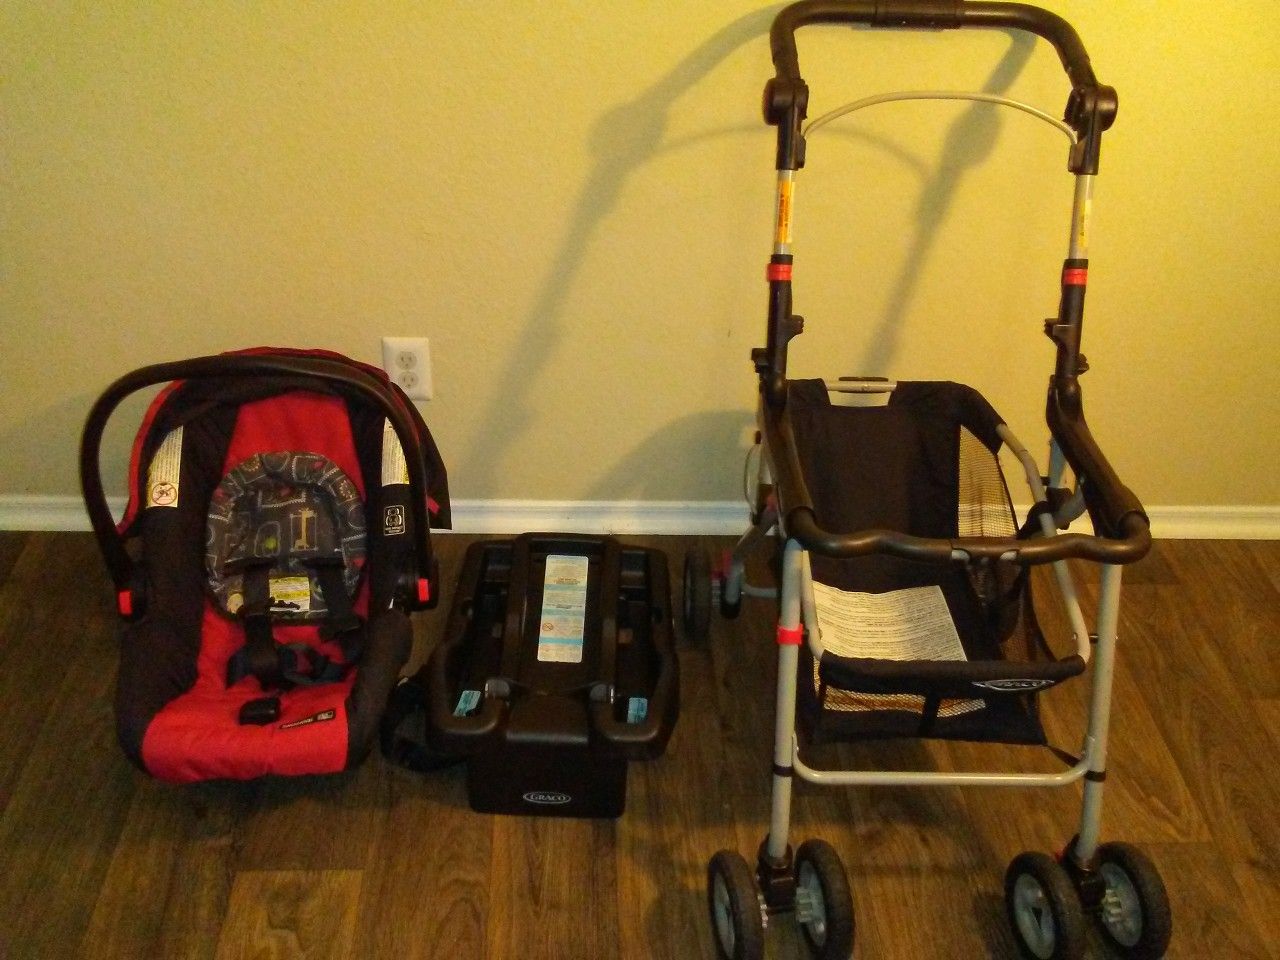 Graco infant car seat + car base + stroller